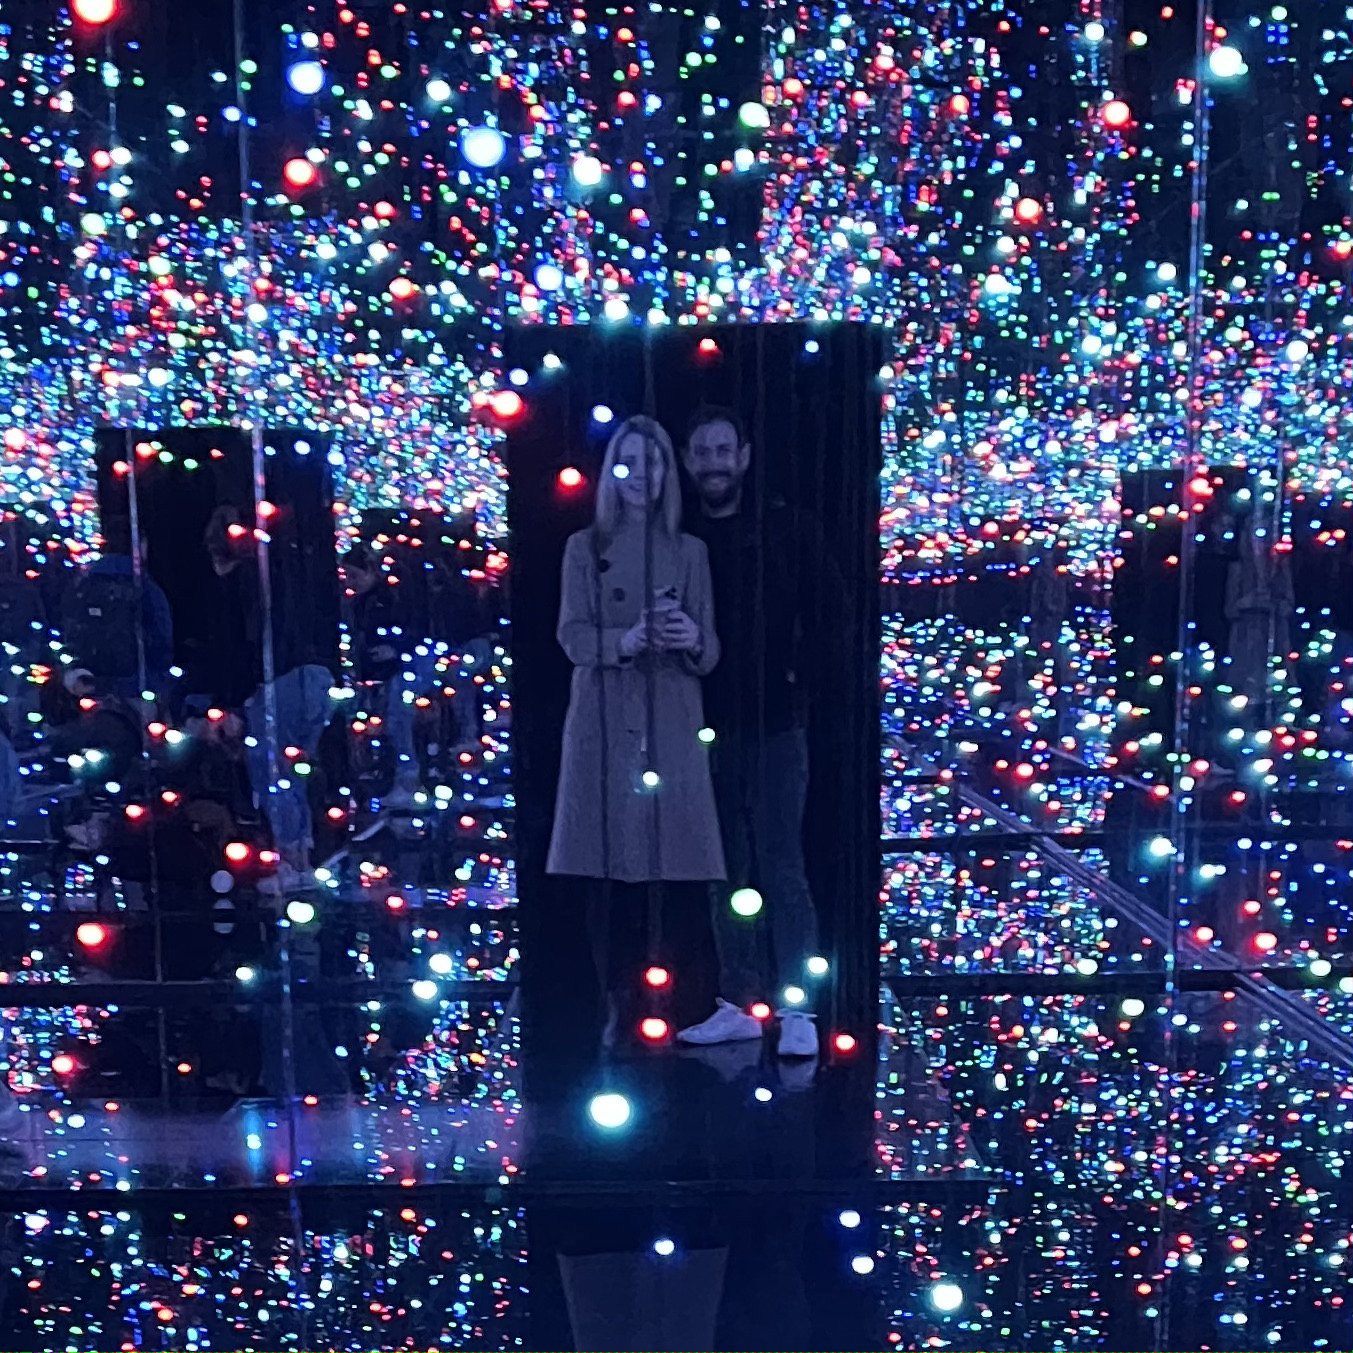 Yayoi Kusama’s Infinity Mirror Room at The Tate Modern